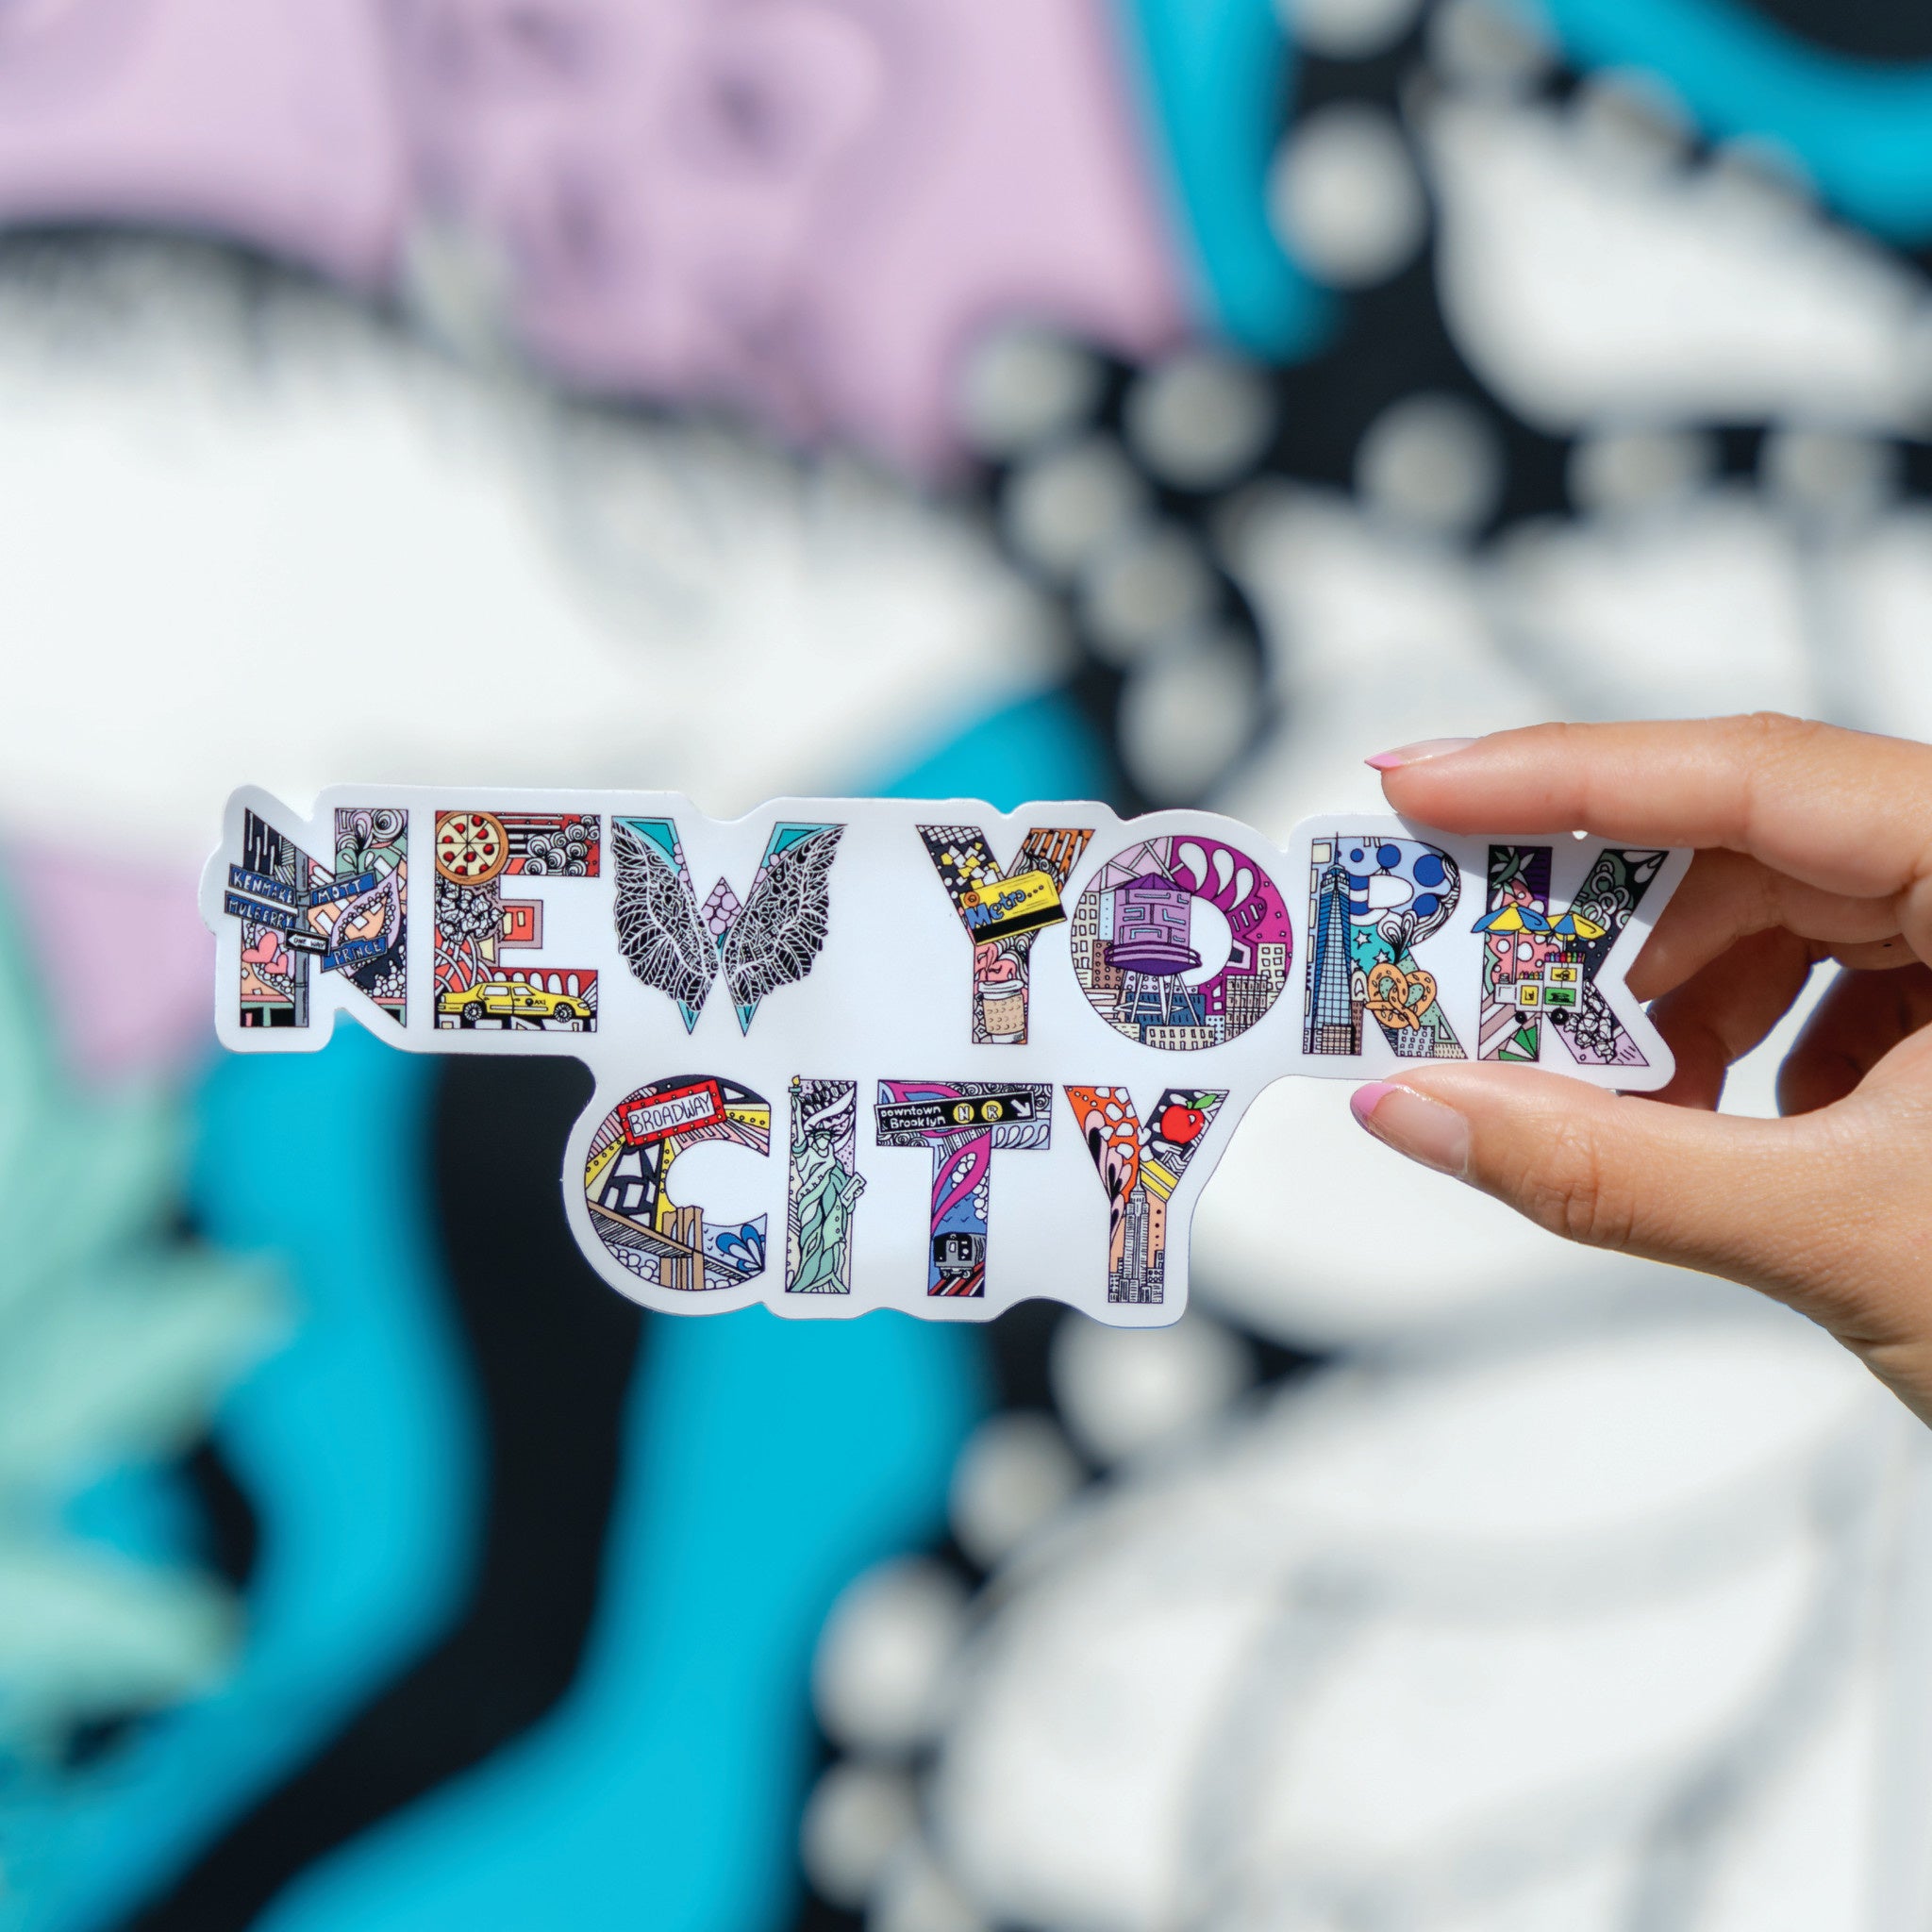 Kelsey Montague City Sticker NYC - Wynwood Walls Shop